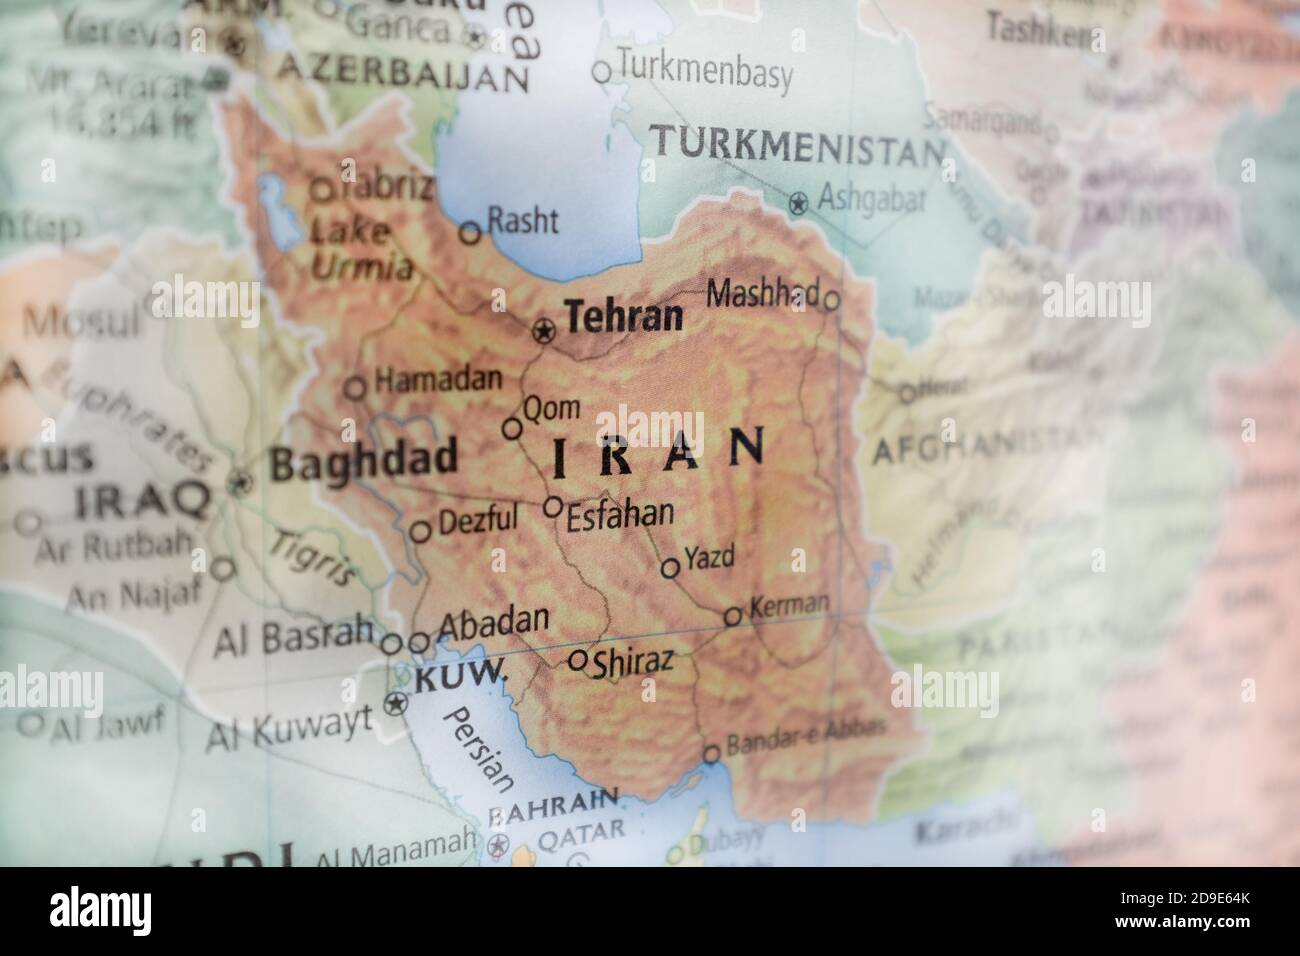 Iran on a map. Stock Photo